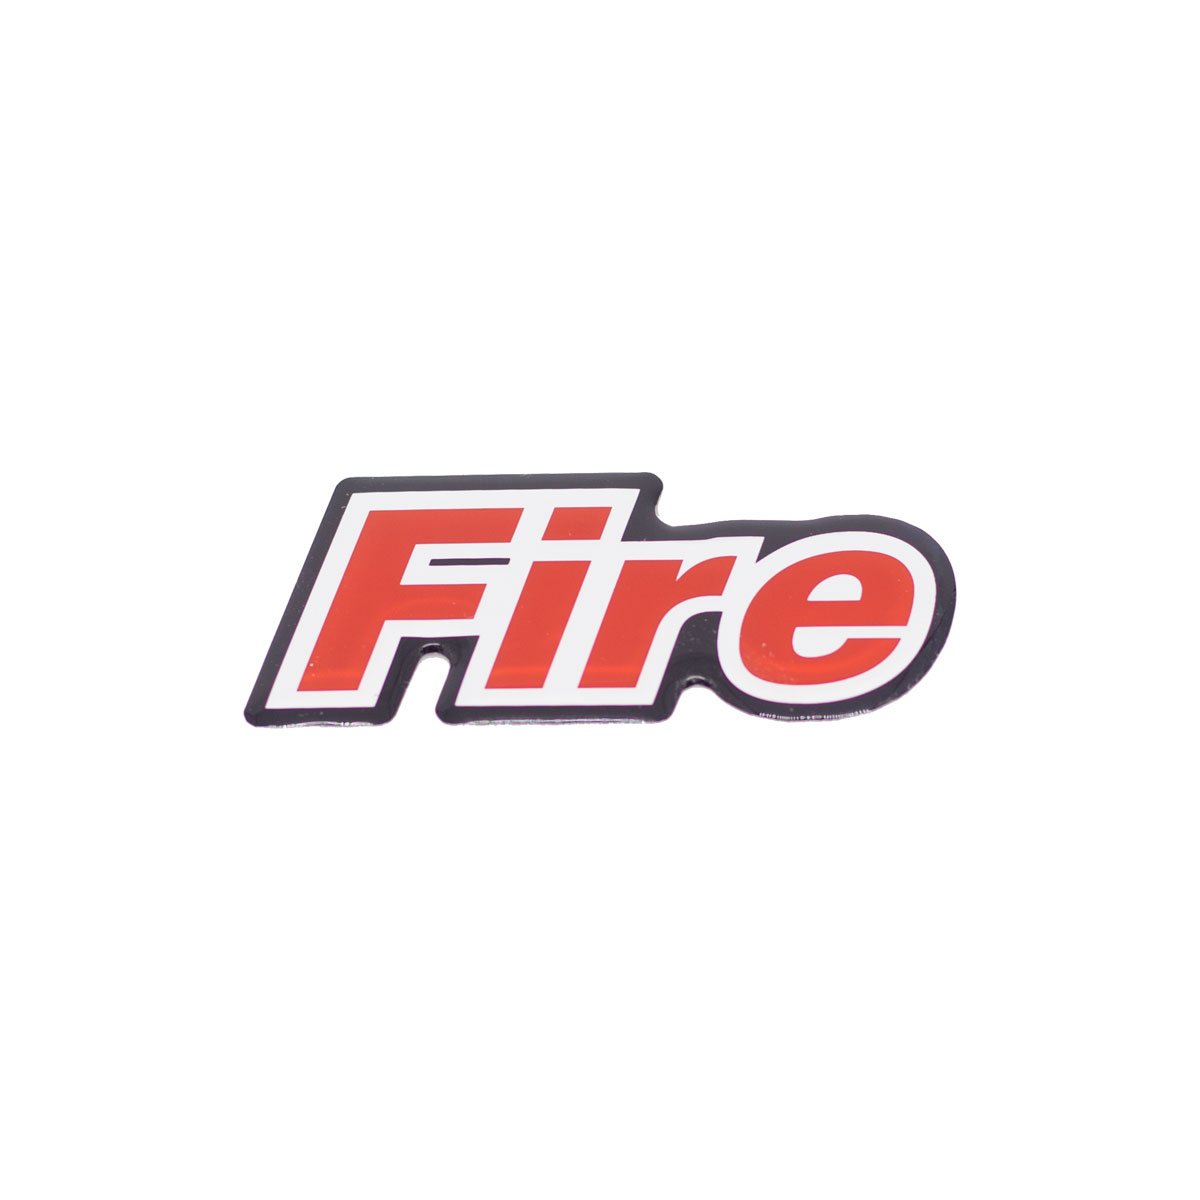 Emblema Fire Lateral (Resinado)